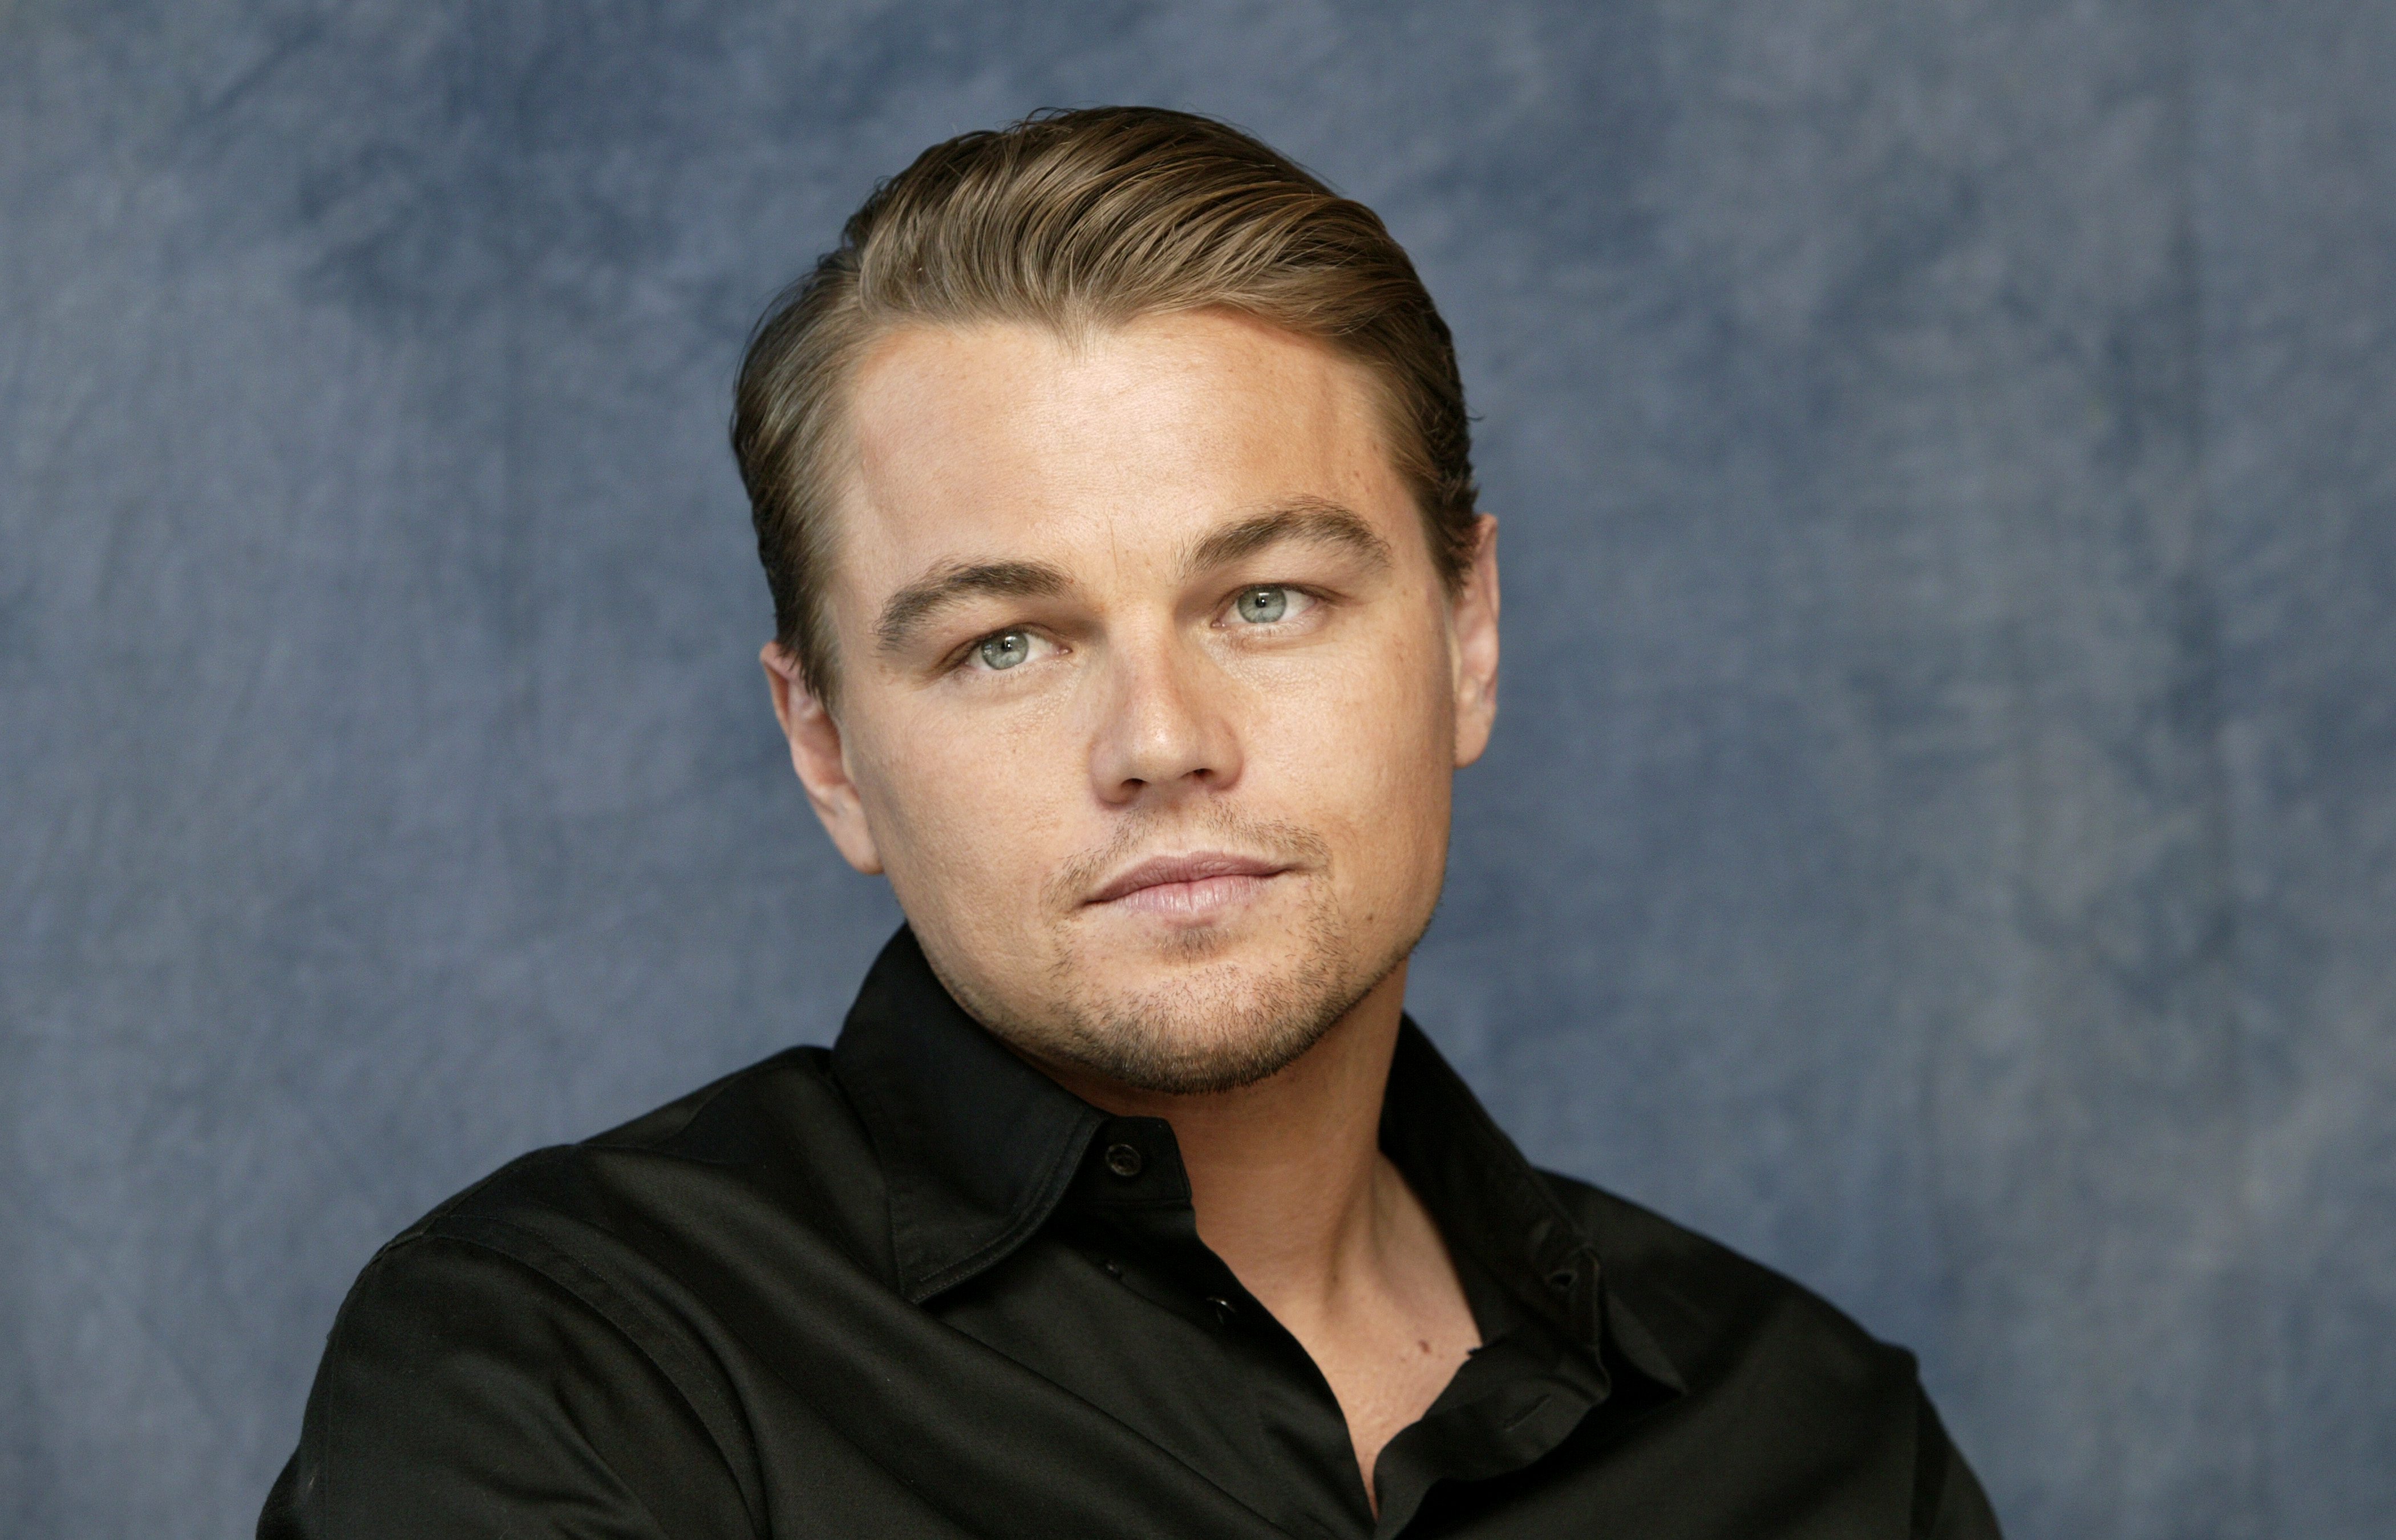 Leonardo DiCaprio photo 189 of 1142 pics, wallpaper - photo #343689 ...